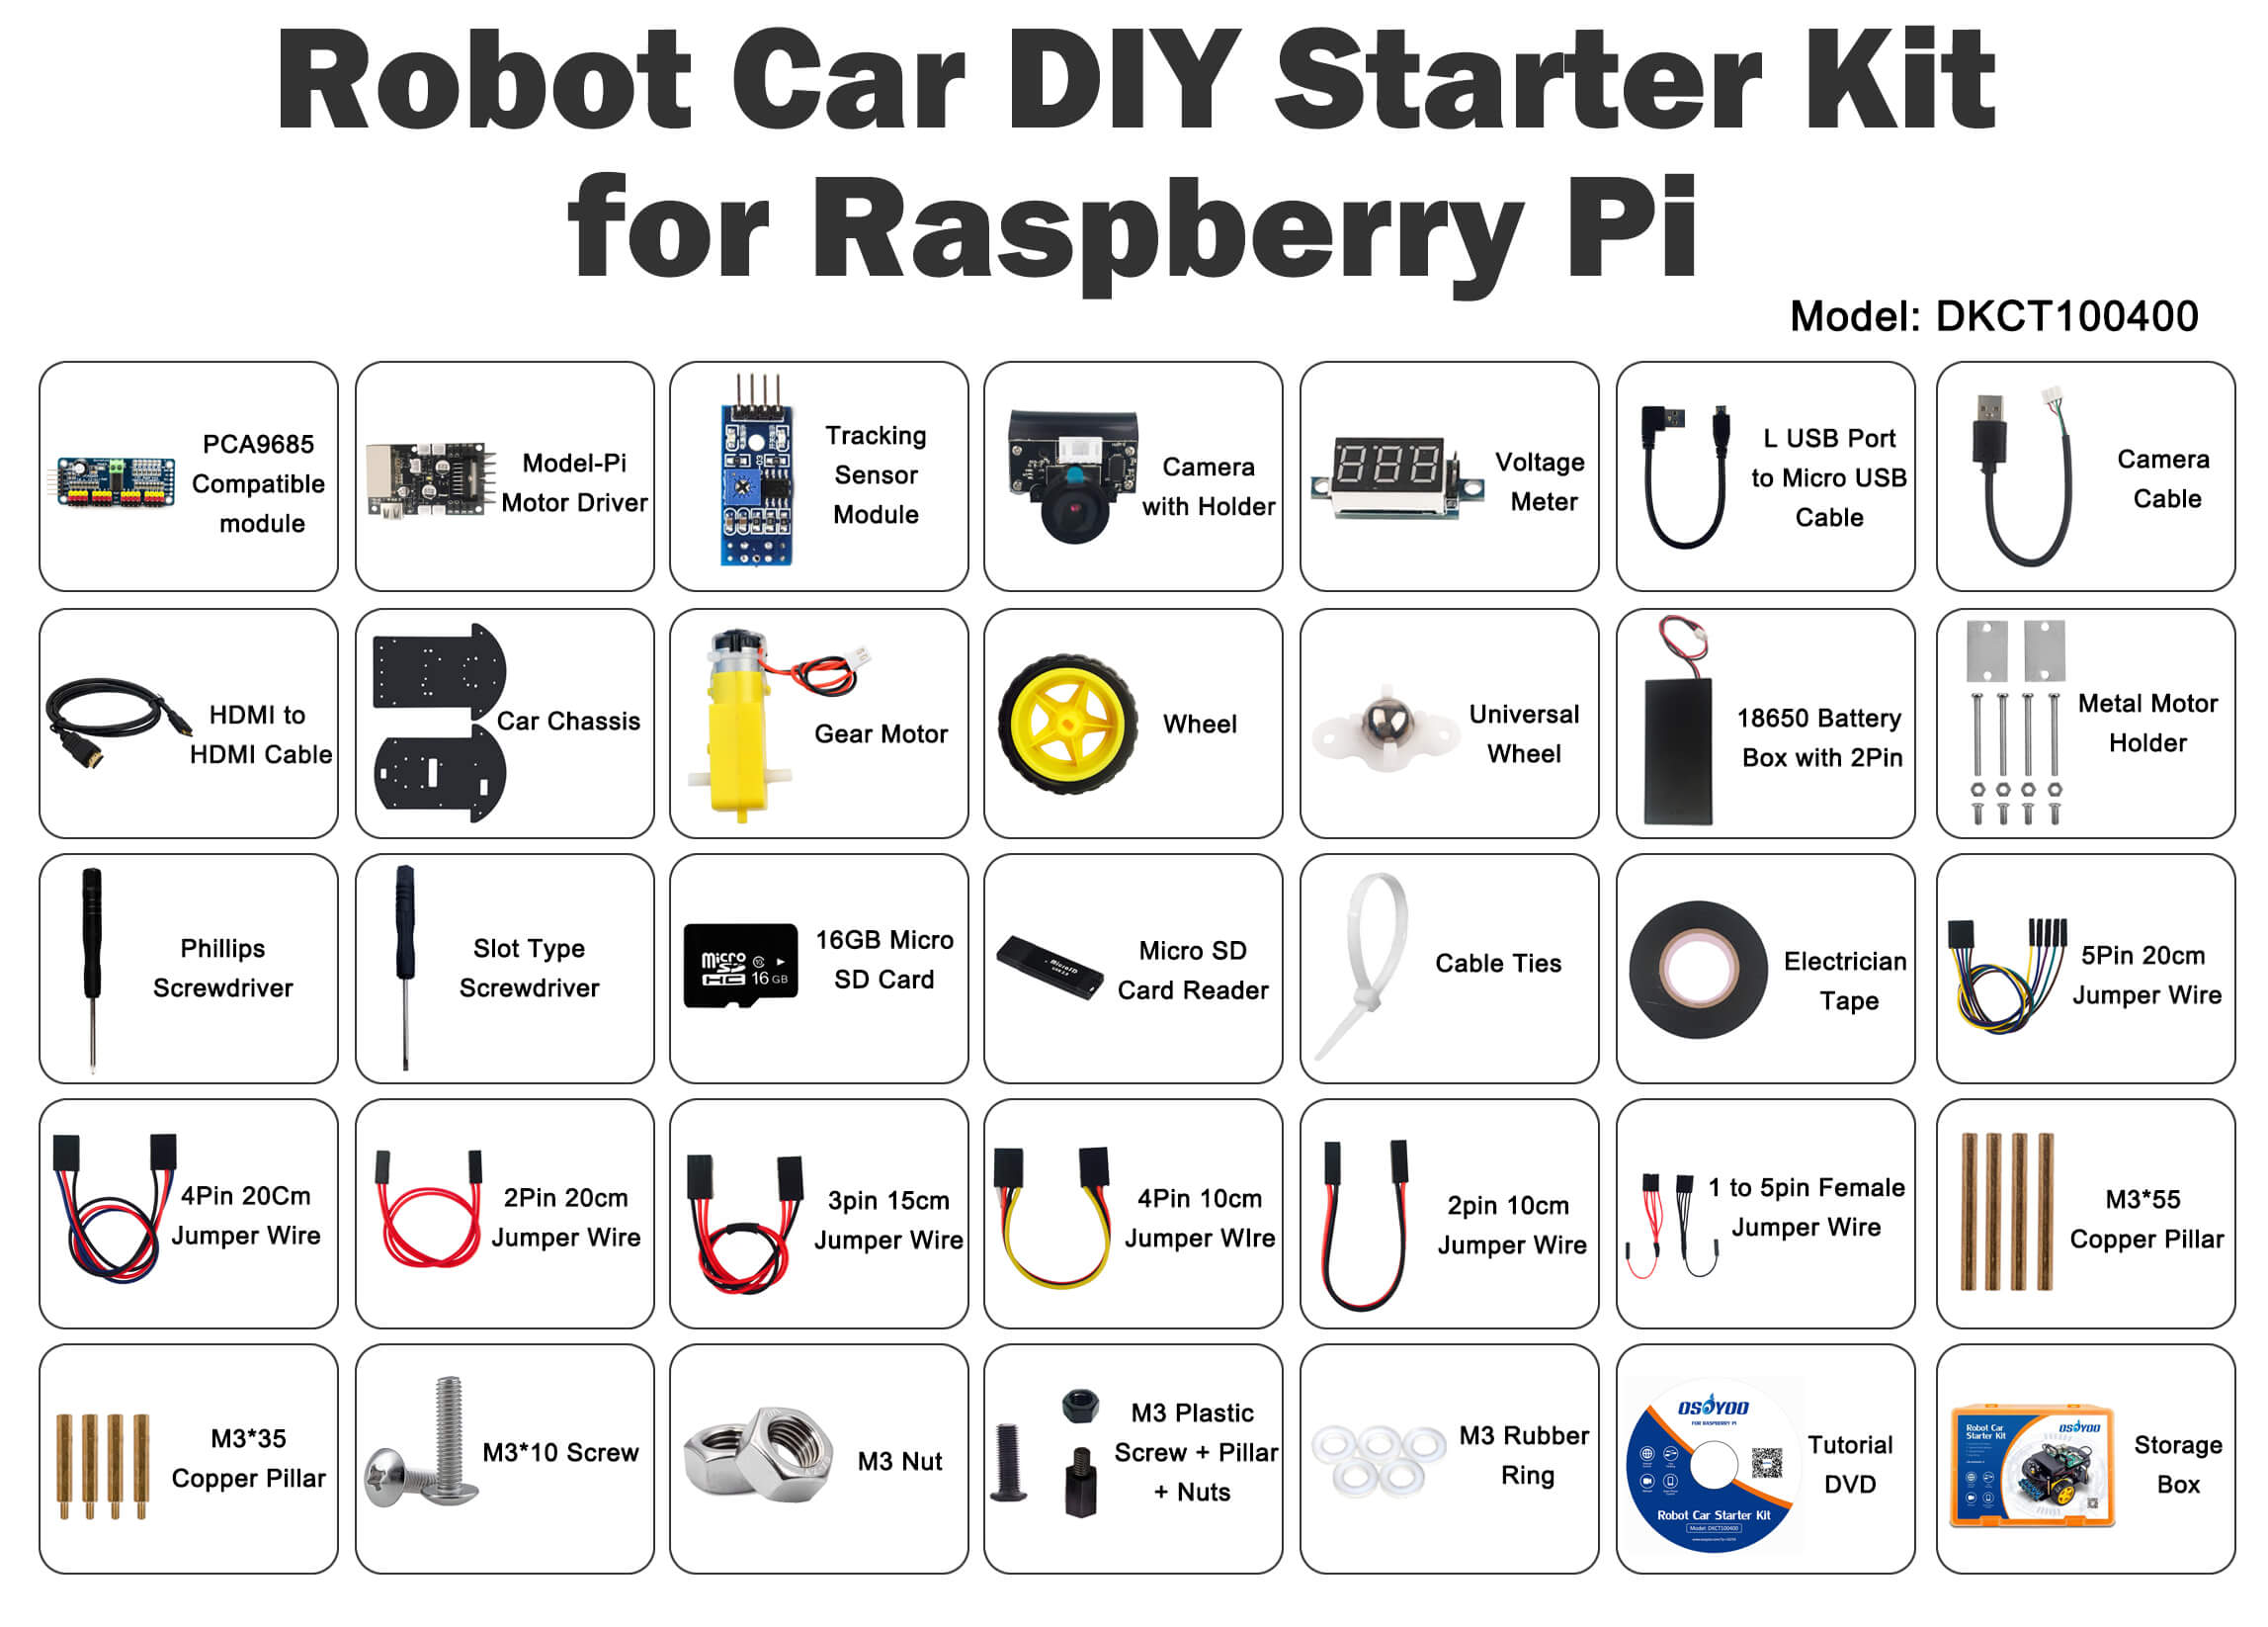 Raspberry Pi Robot Car DIY learning Kit Package Listing